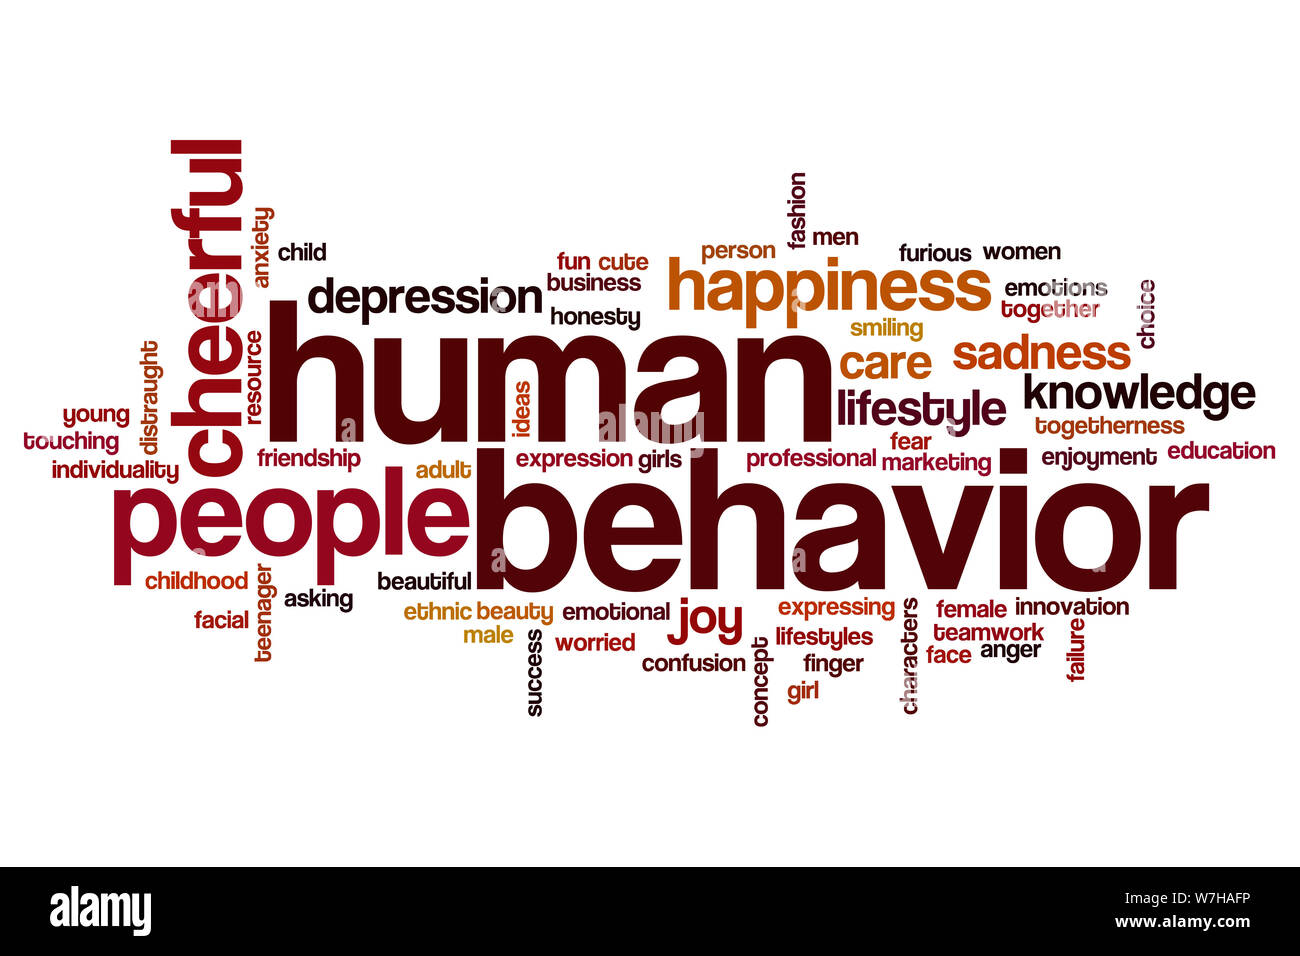 Human behavior word cloud concept Stock Photo